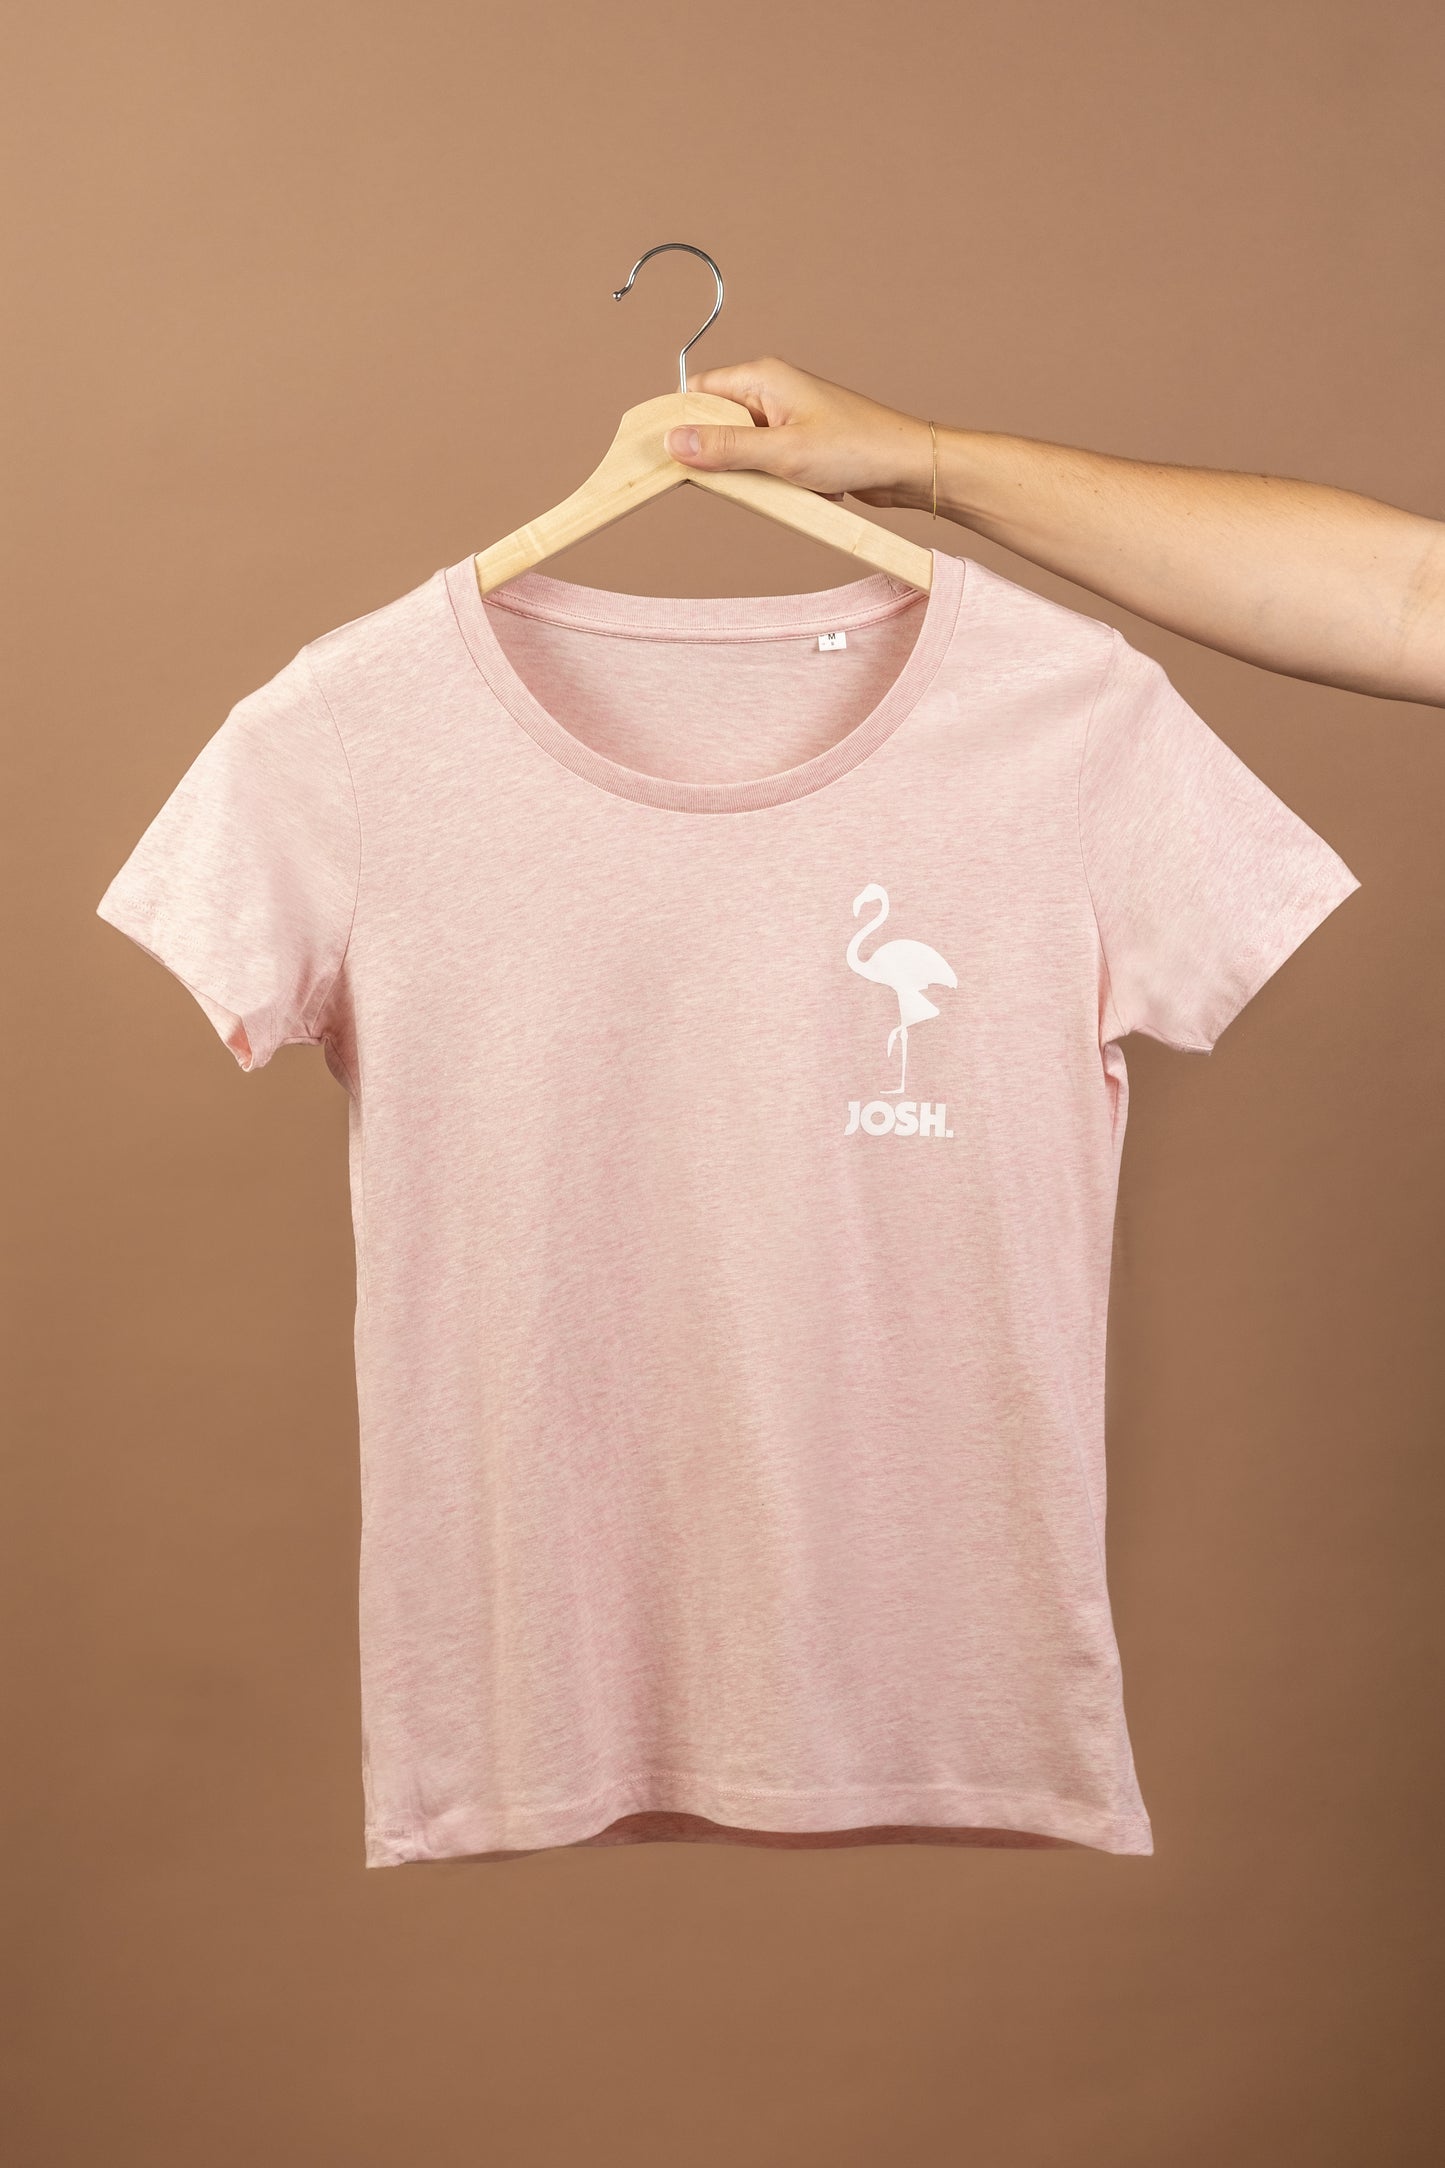 JOSH. Girlie-Shirt "Flamingo"